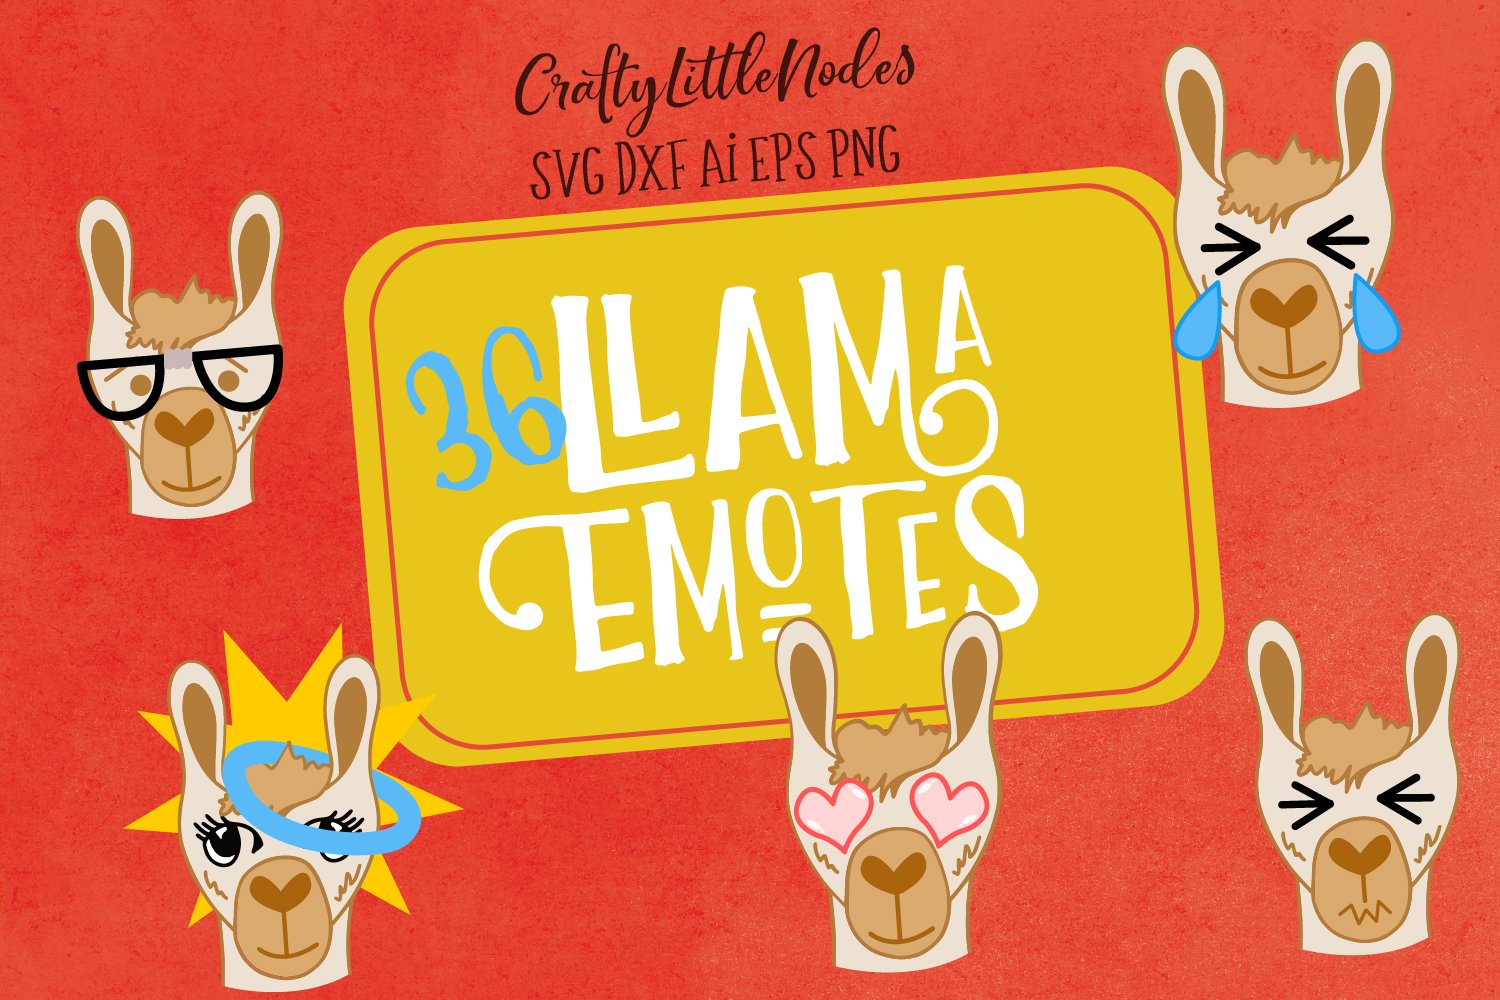 Llama Emotes Bundle Pack cover image.